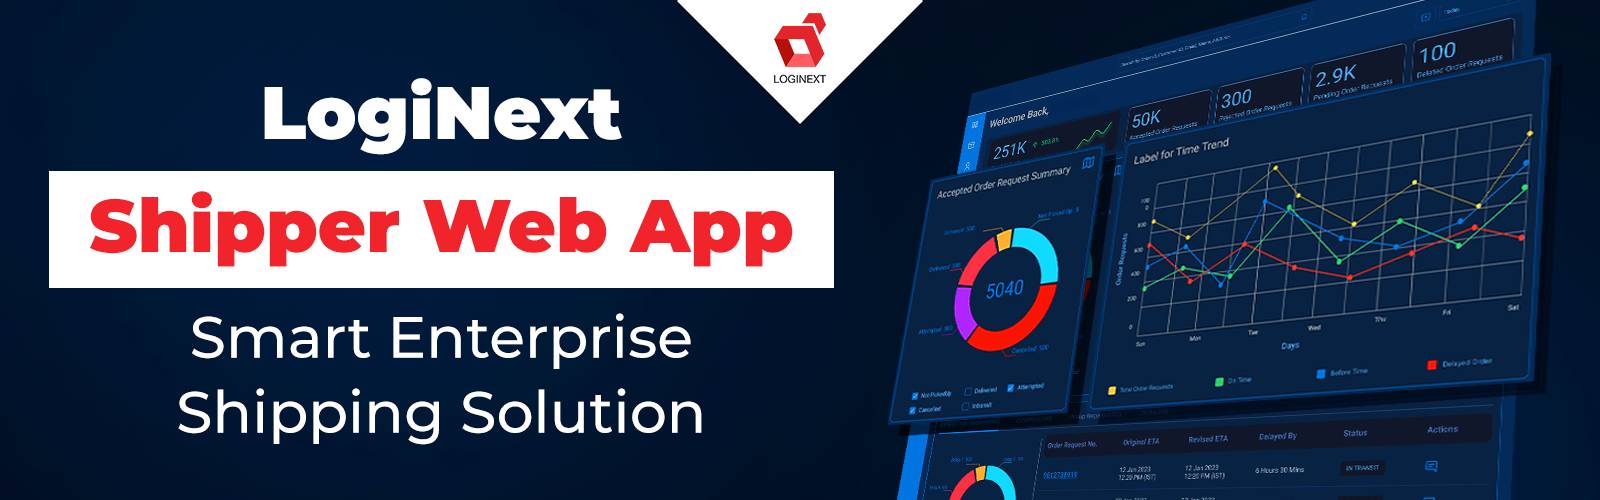 LogiNext Shipper Web App- The best Shipper Web App